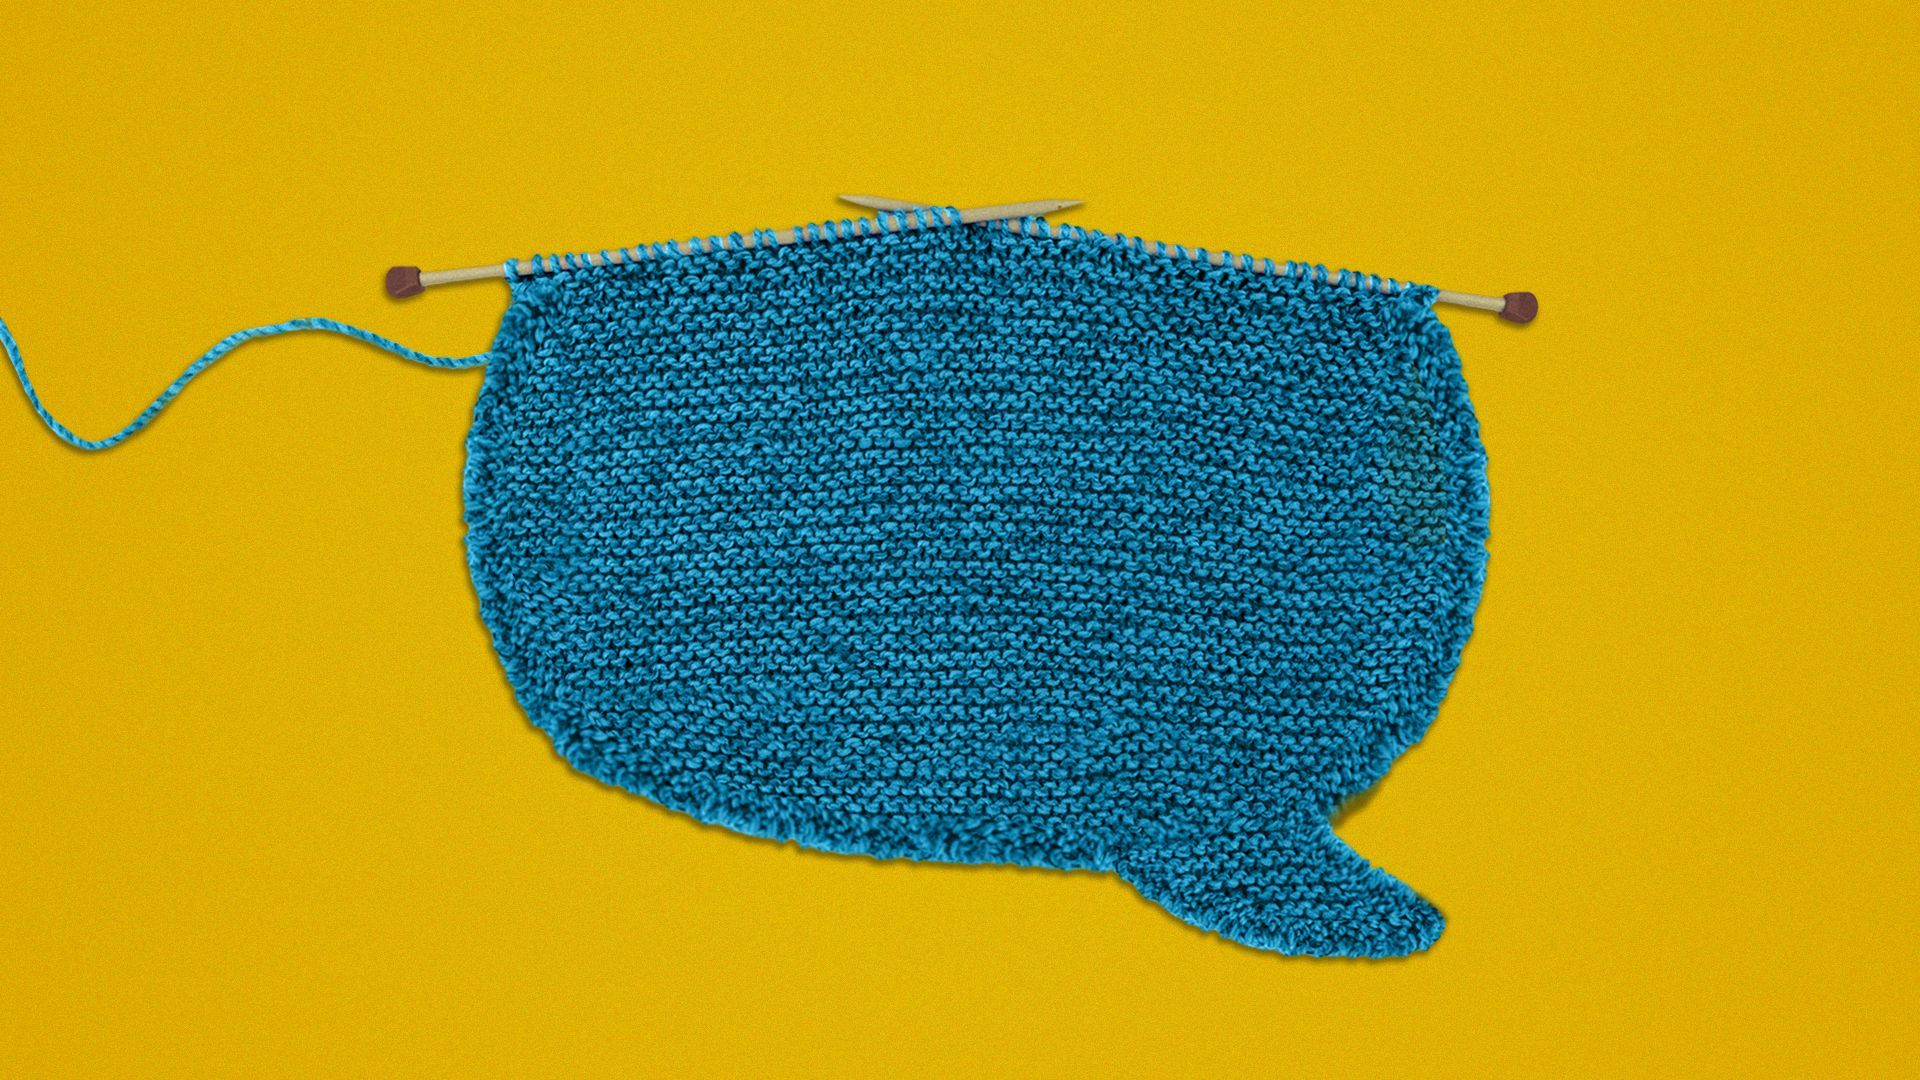 Illustration of knitting needles making a speech bubble.